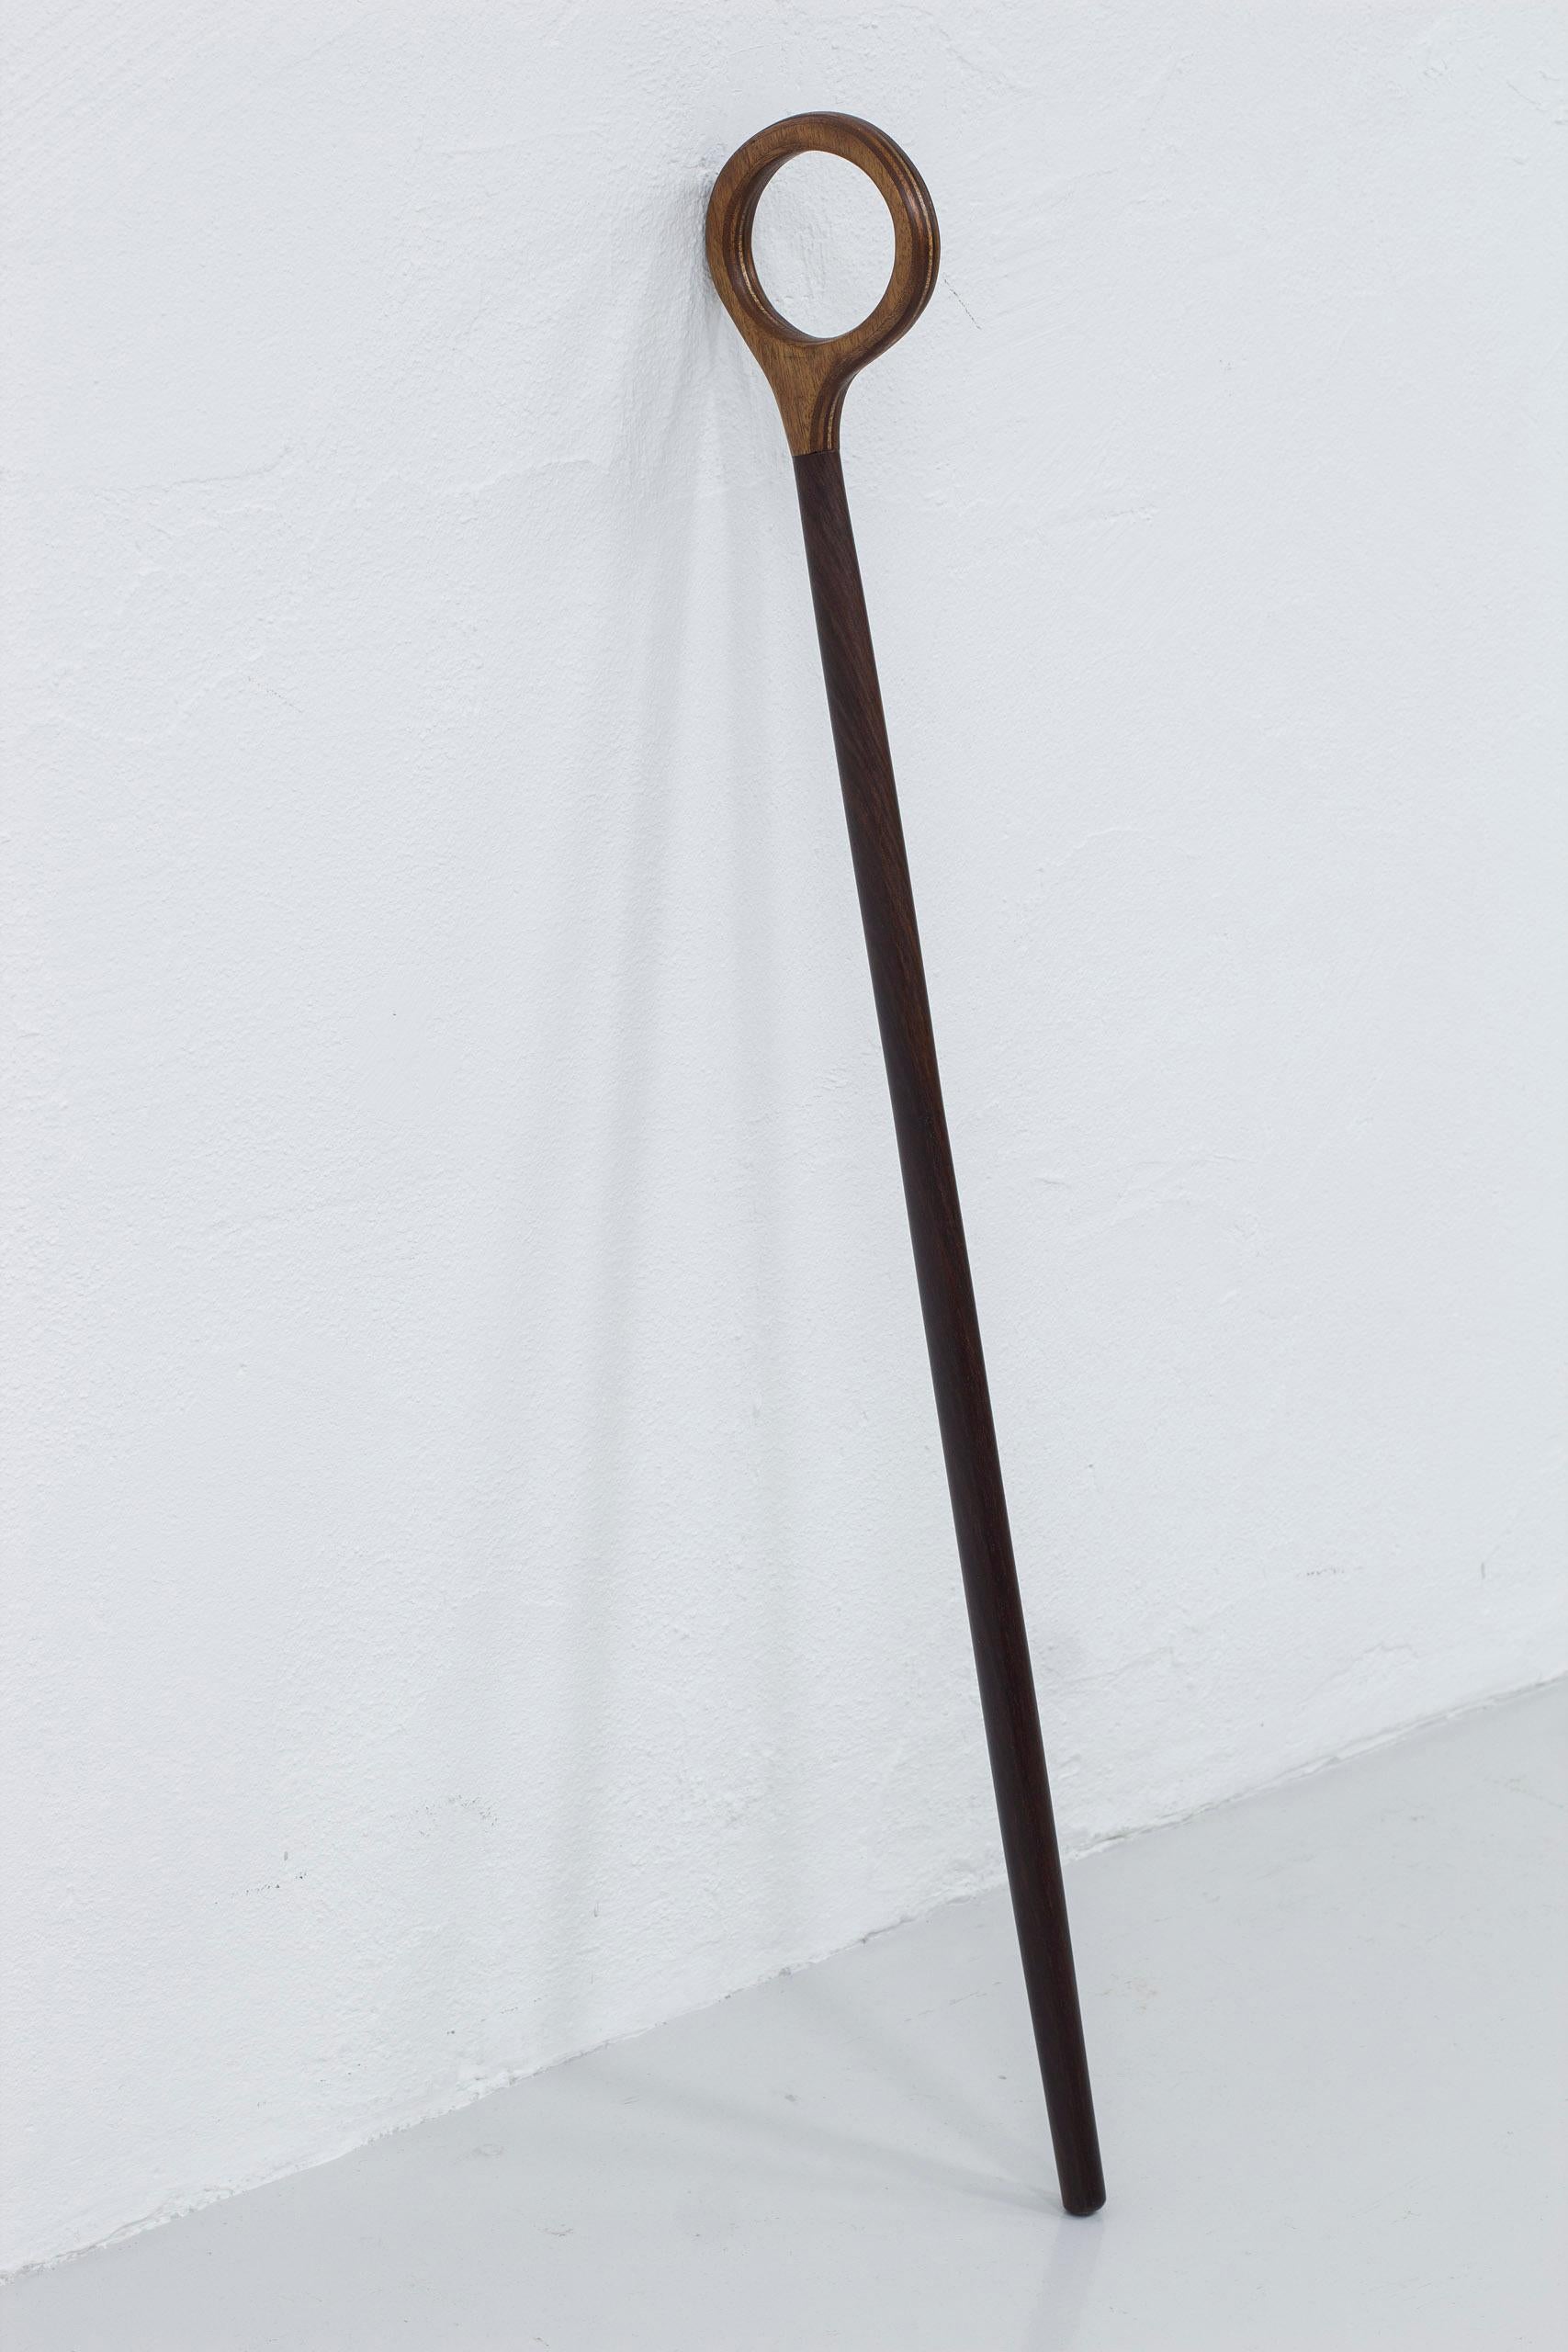 Scandinavian Modern Walking Stick / Cane by Nanna & Jørgen Ditzel, by Kold's Savvaerk, Denmark For Sale